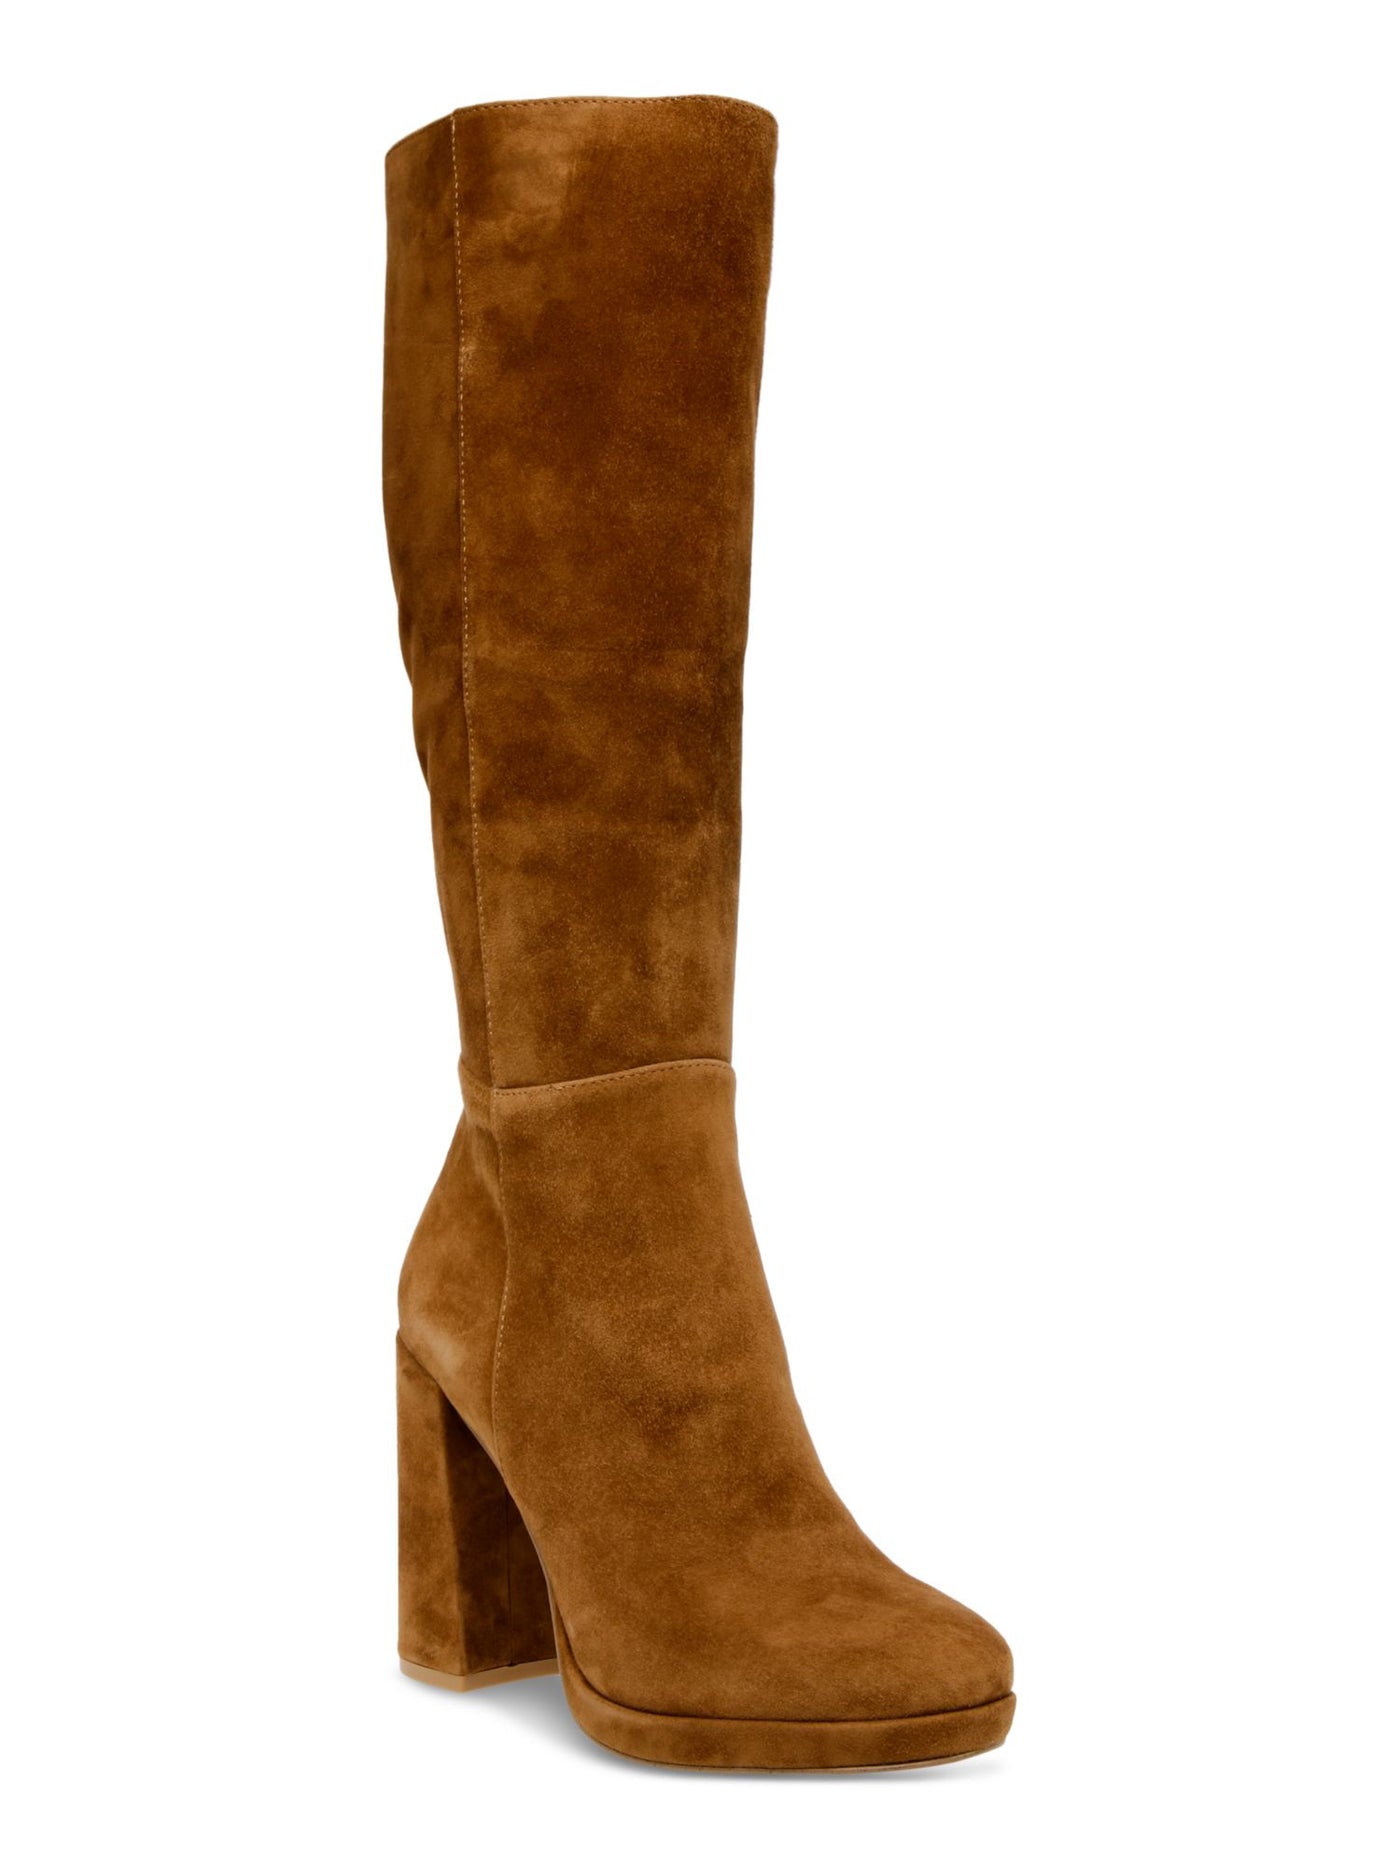 STEVE MADDEN Womens Brown Comfort Marcello Round Toe Block Heel Zip-Up Leather Dress Boots 9 M